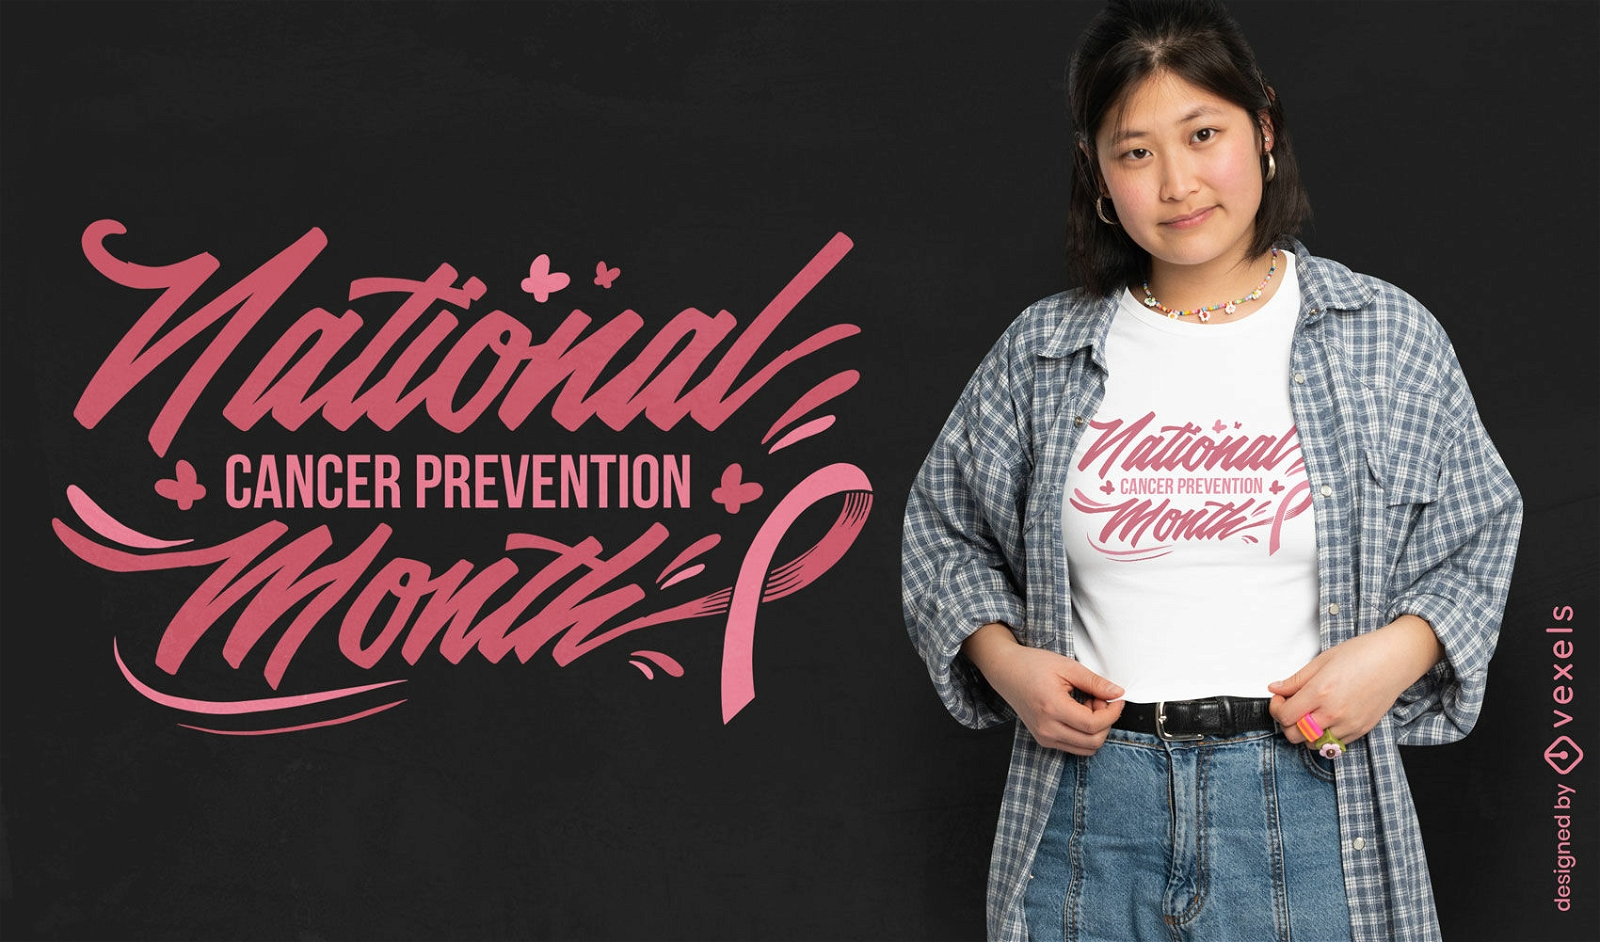 Zitat-T-Shirt-Design des Krebspräventionsmonats